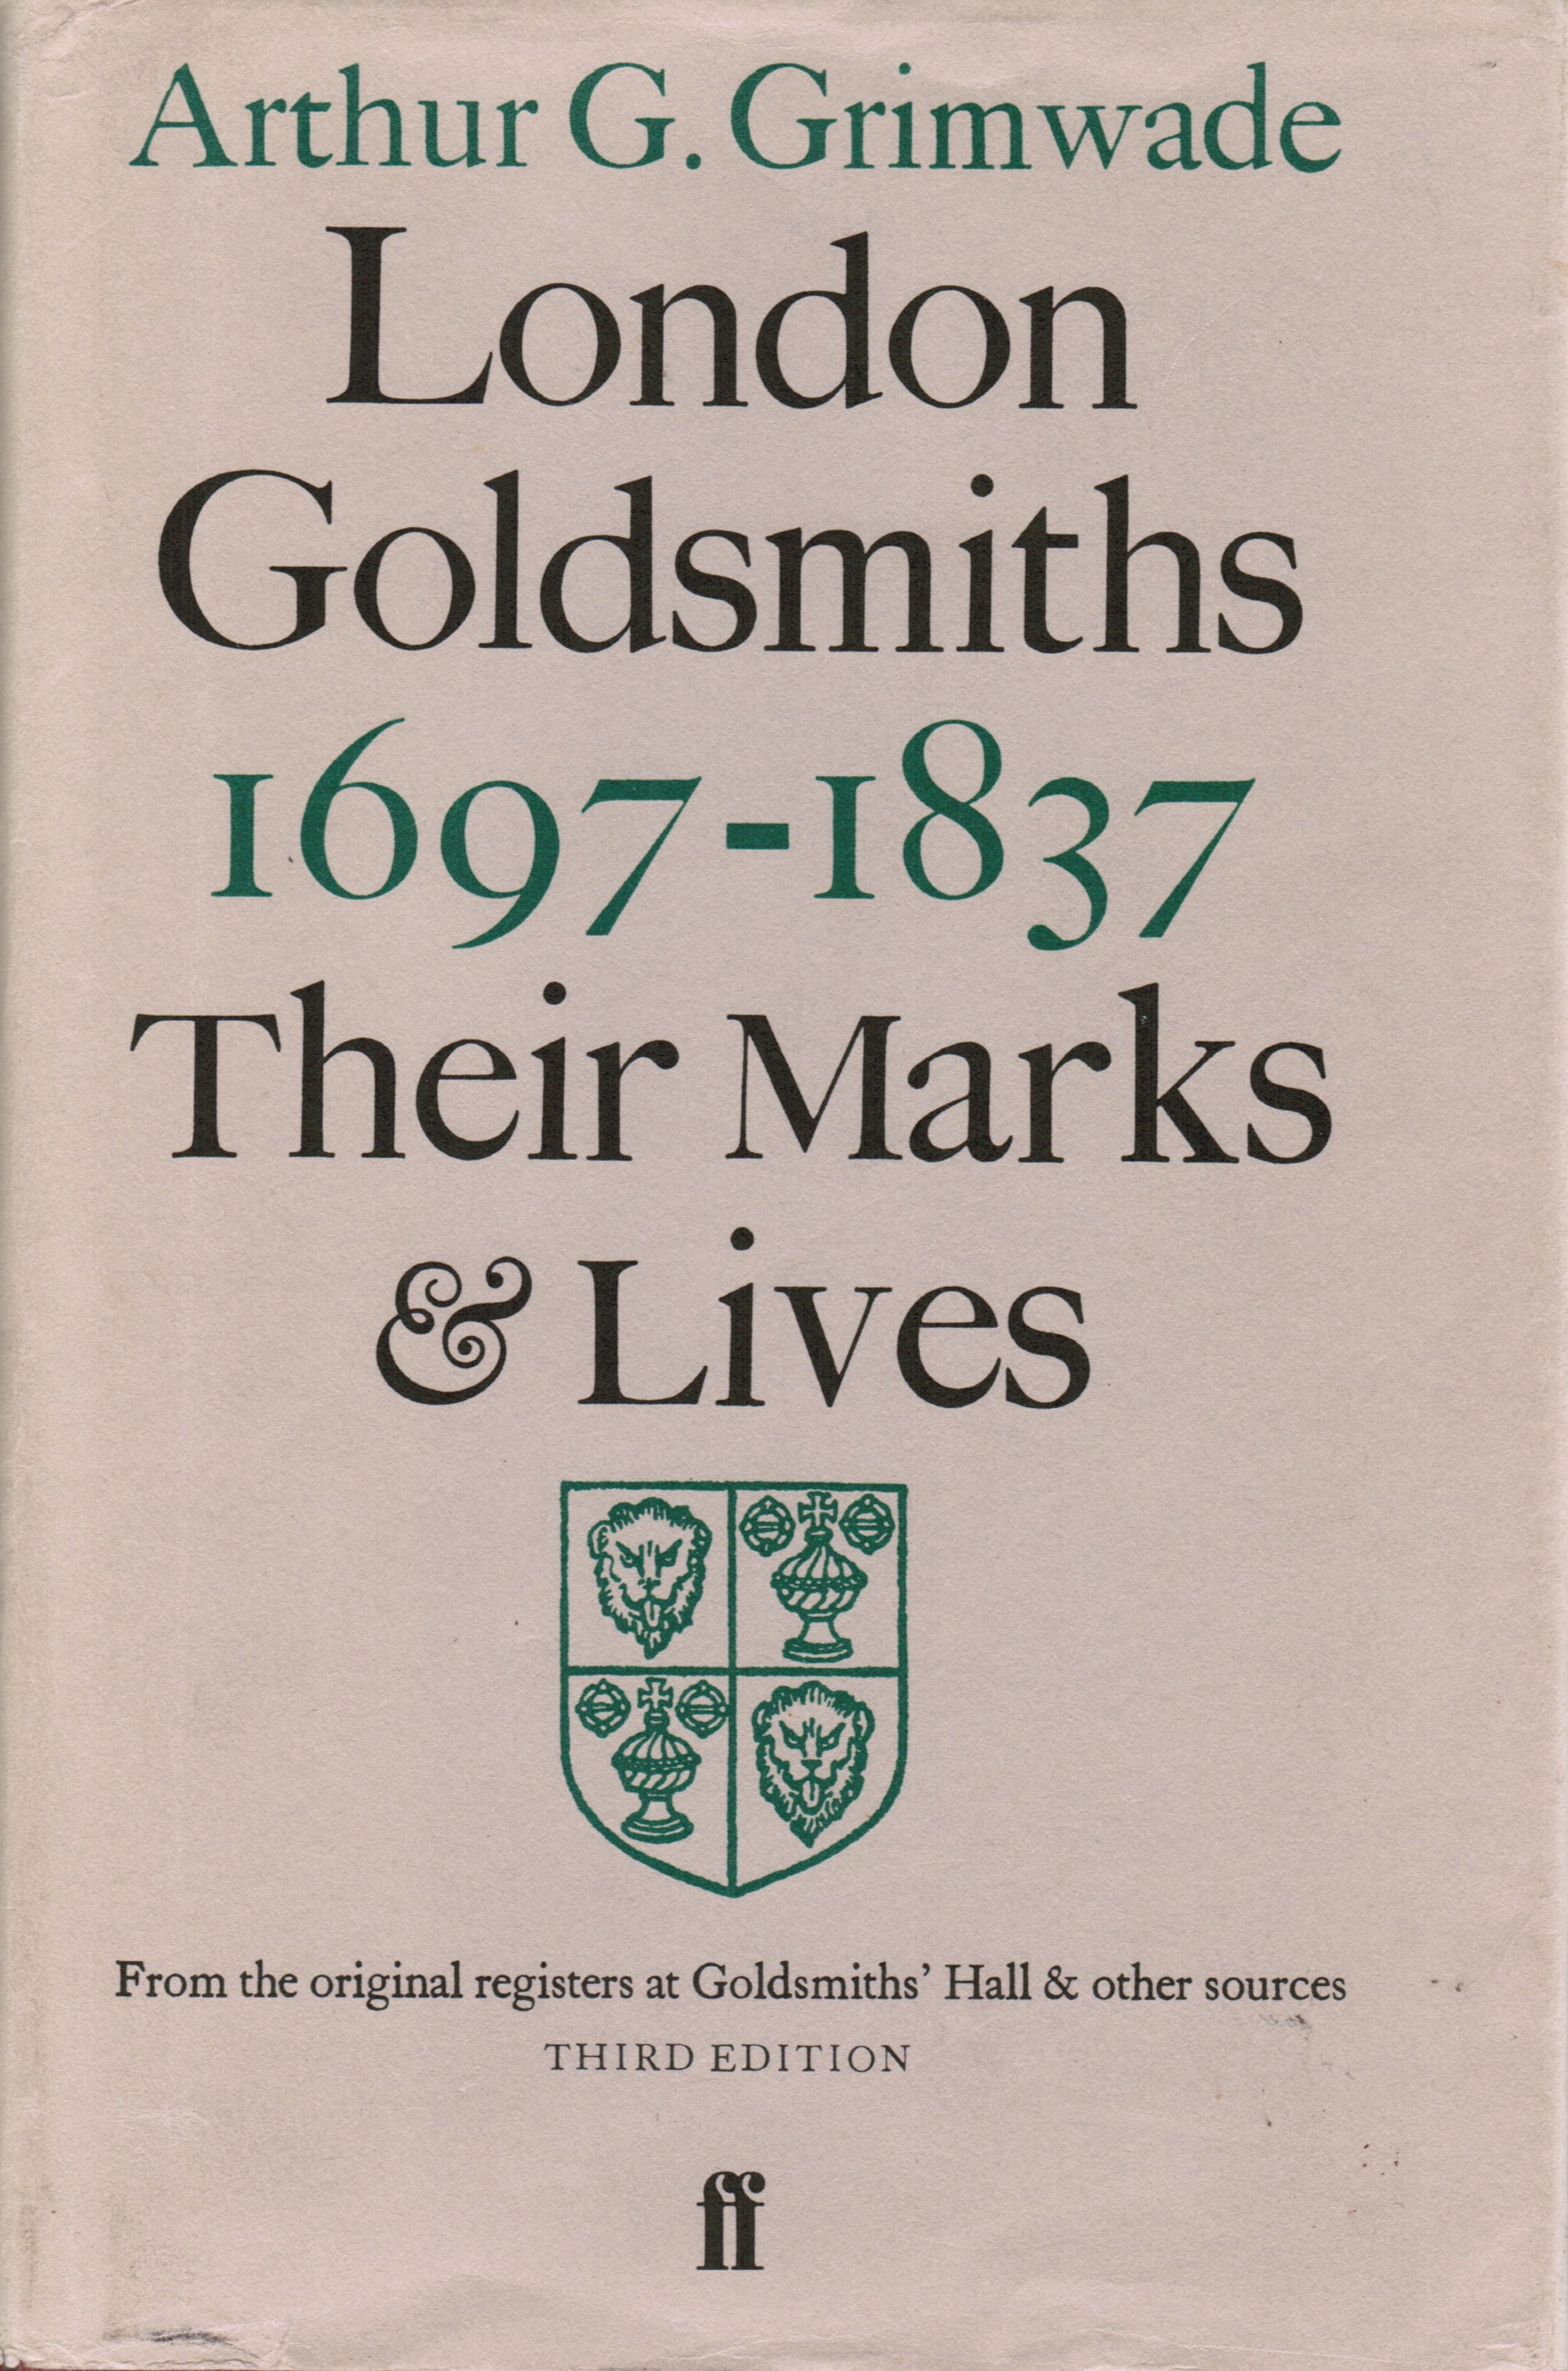 London Goldsmiths 1697-1837: Their Marks and Lives - Grimwade, Arthur G.